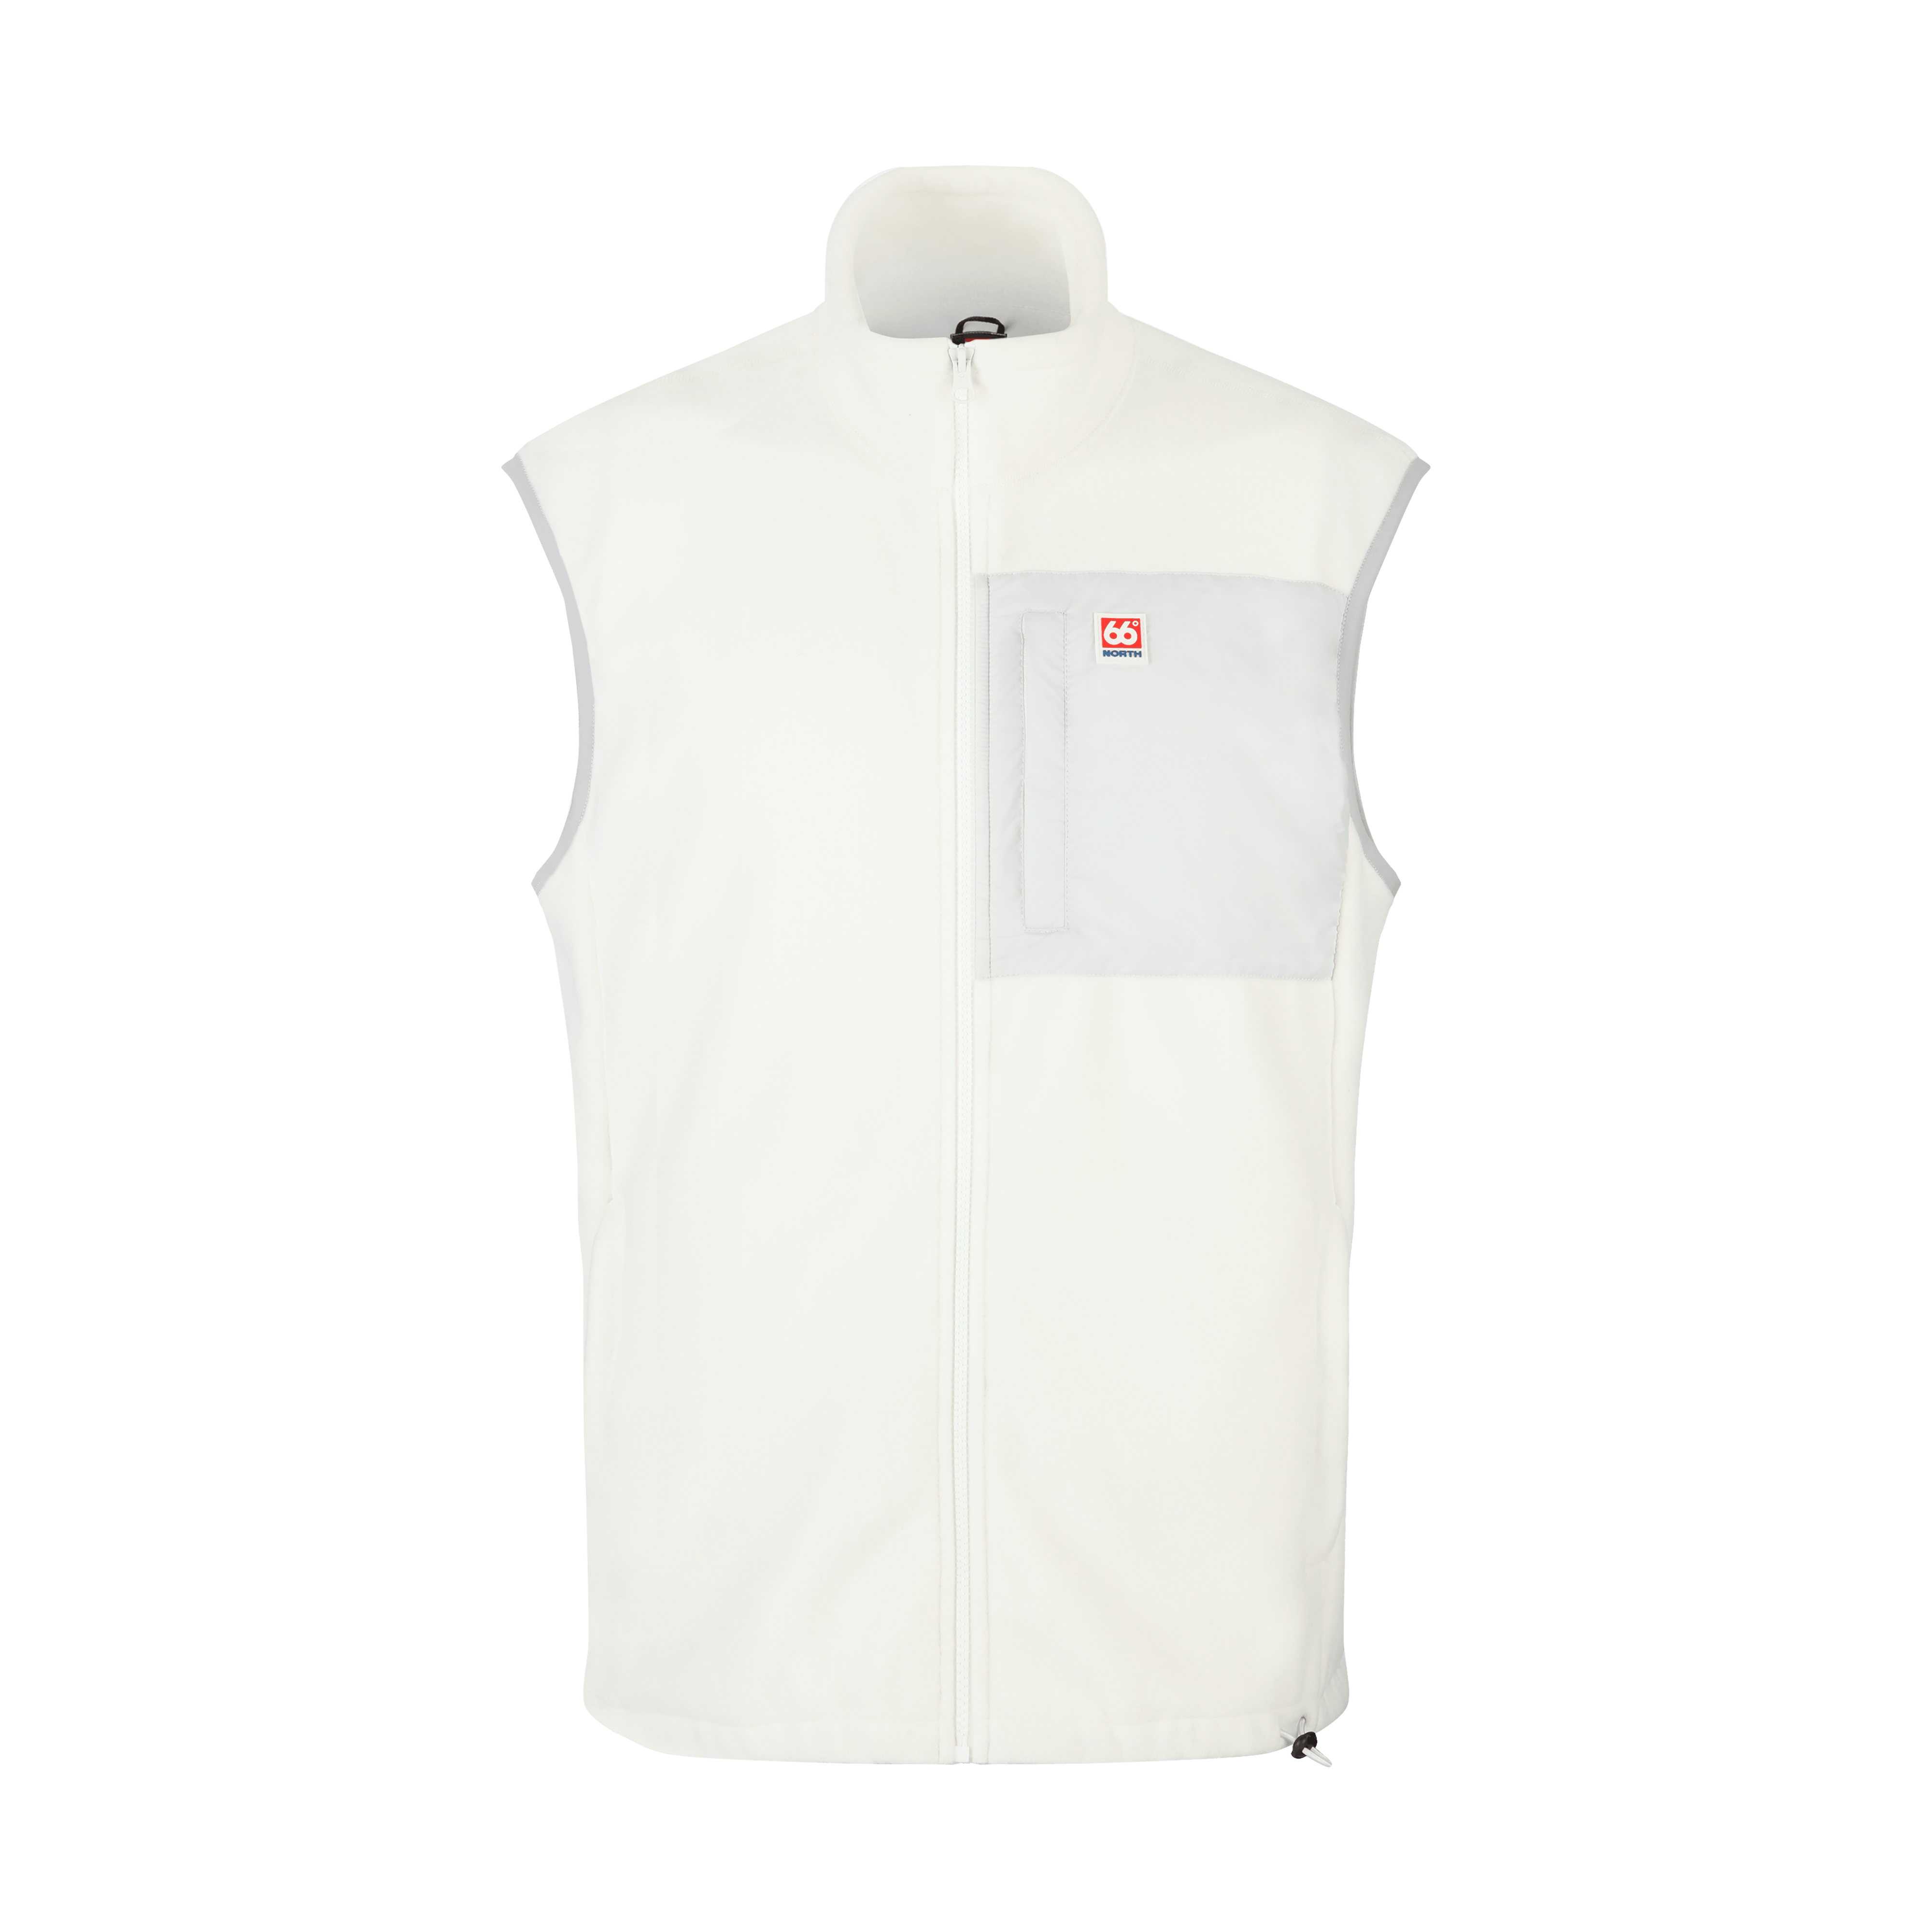 66 North Men's Esja Jackets & Coats - White - M